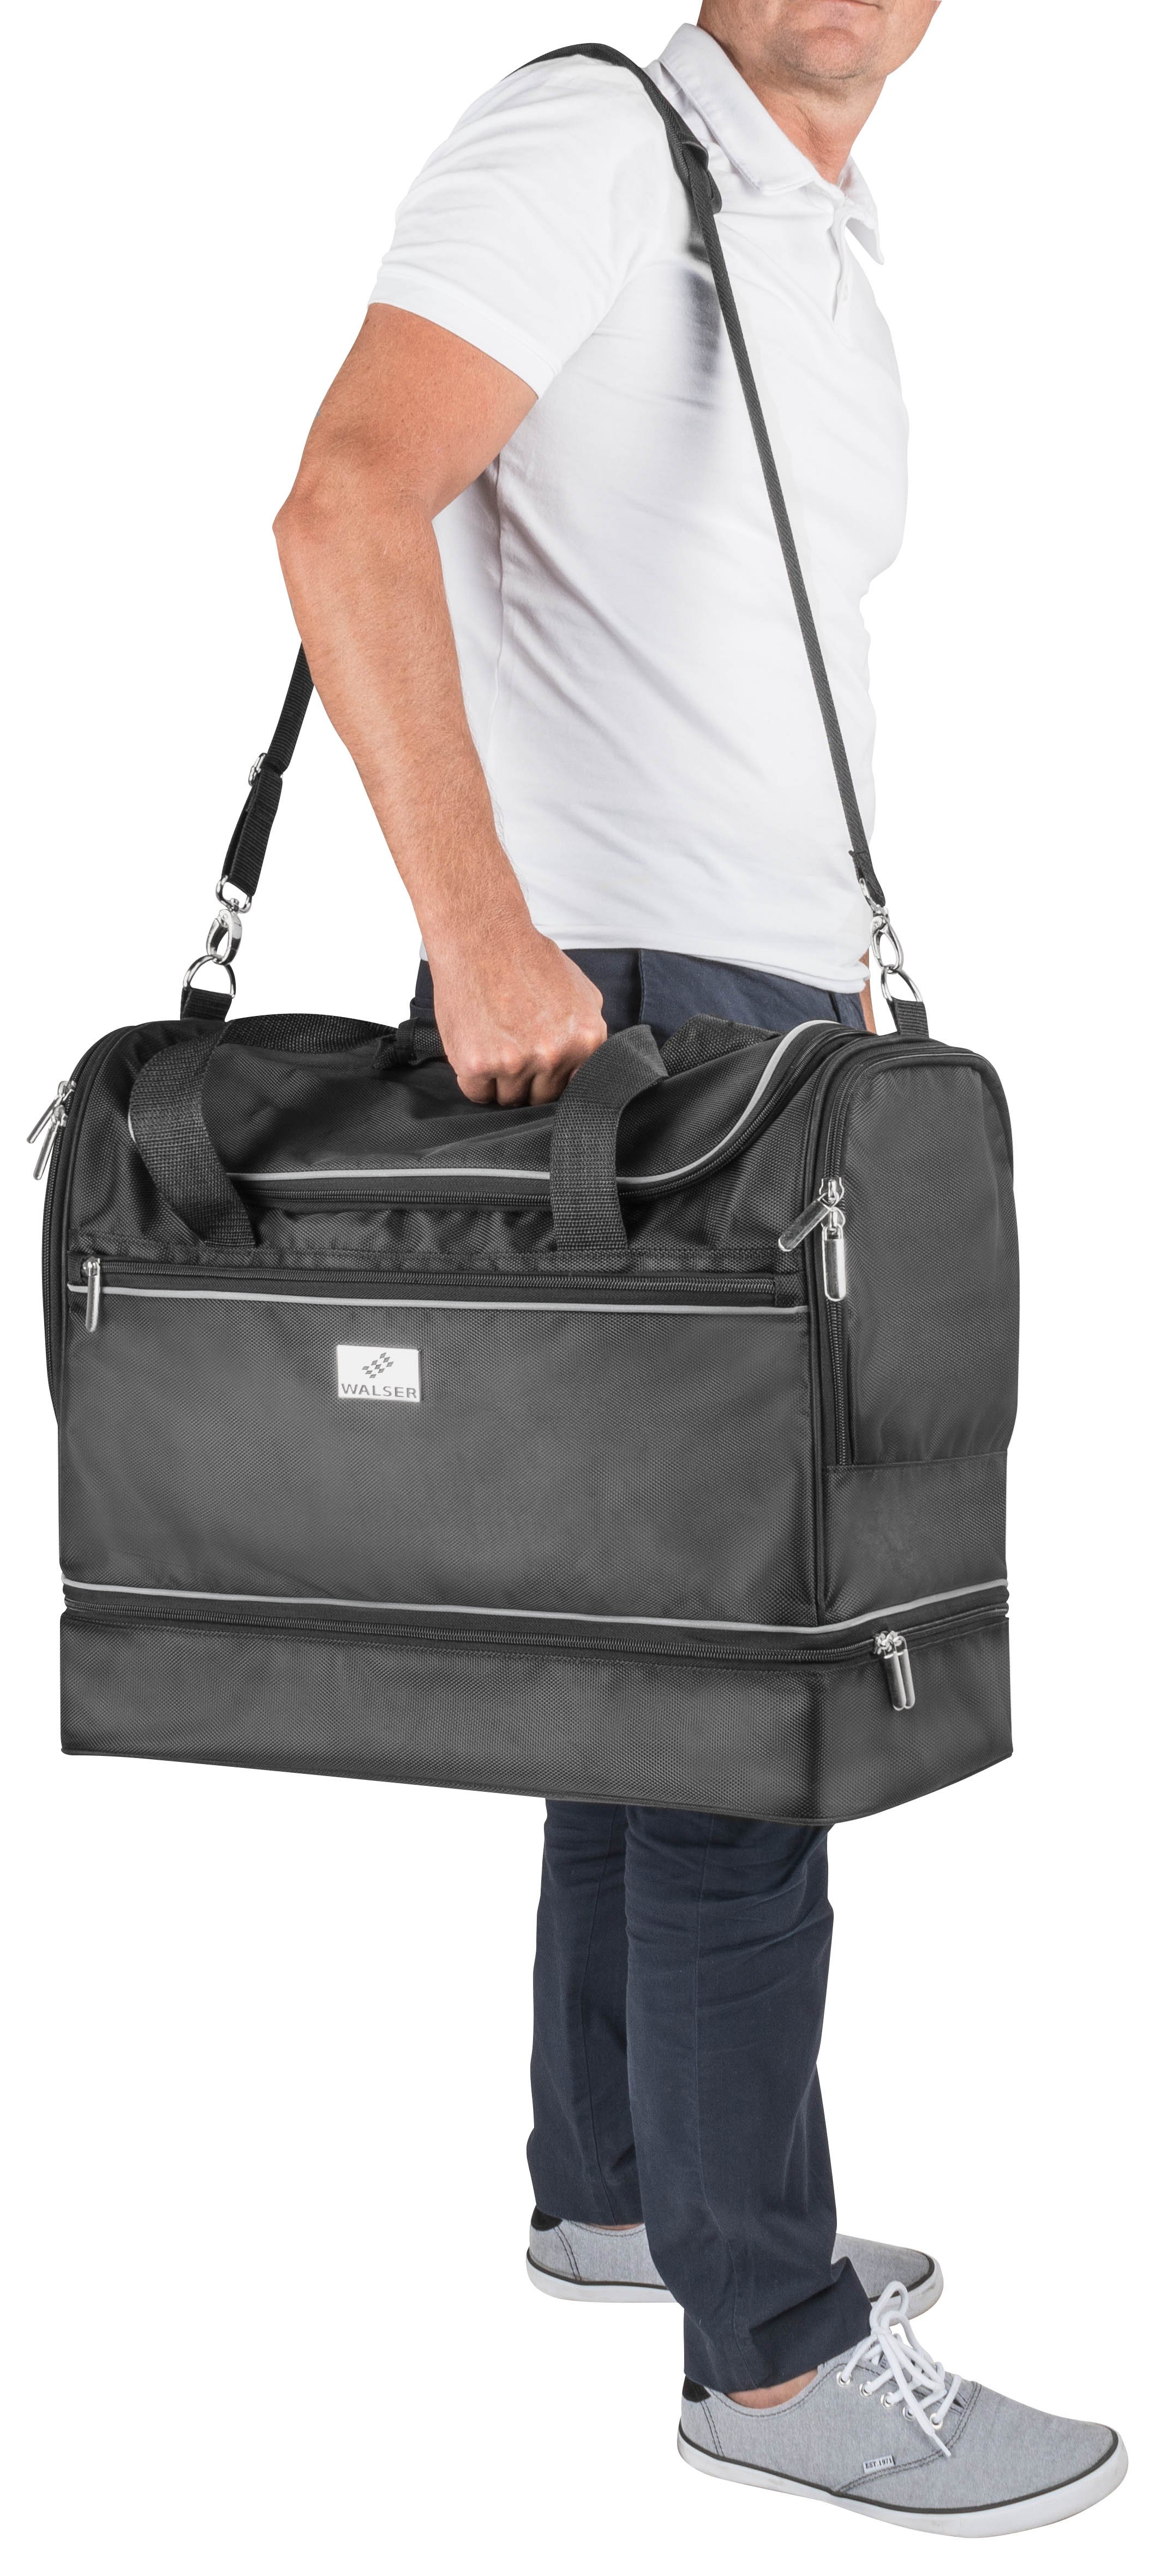 Carbags sports bag 35x30x40cm black